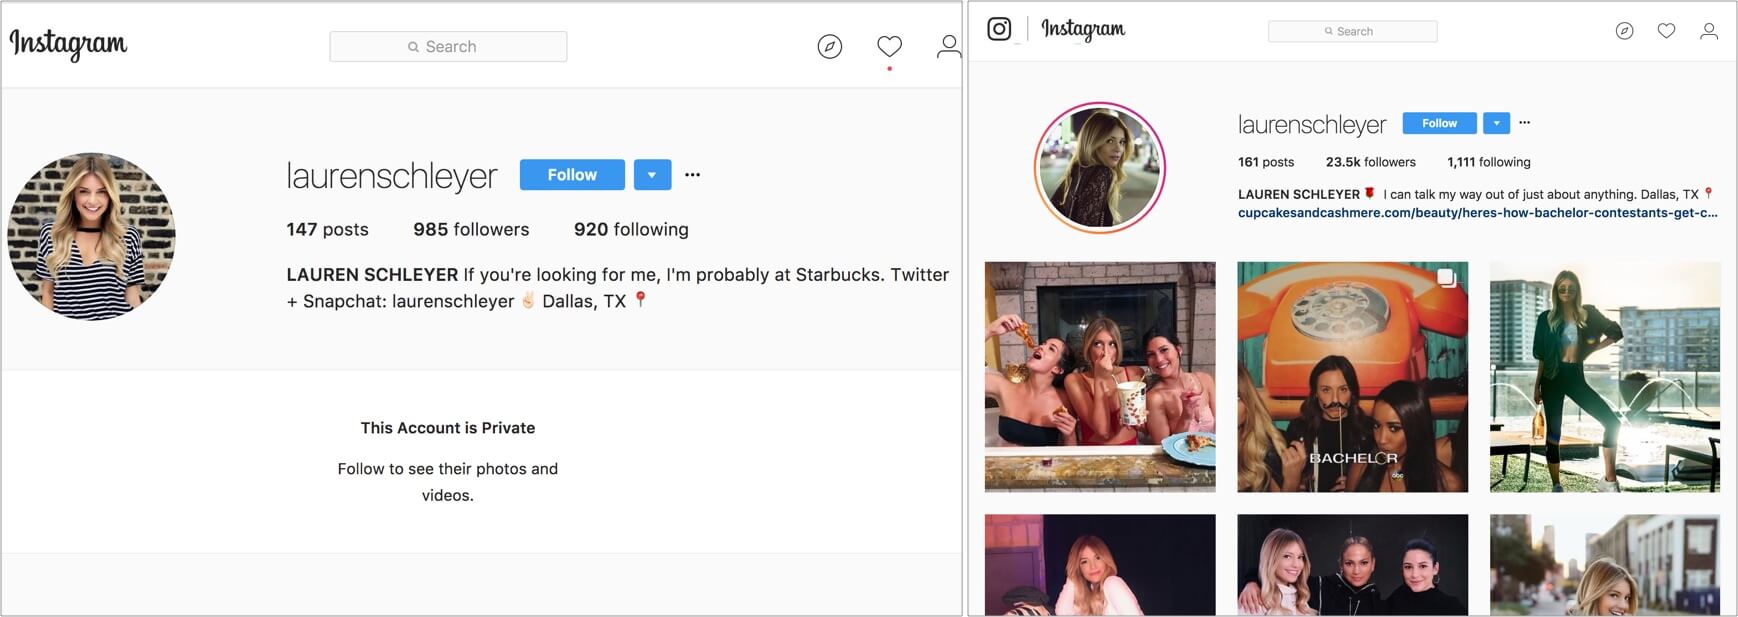 Lauren S Instagram Followers from The Bachelor